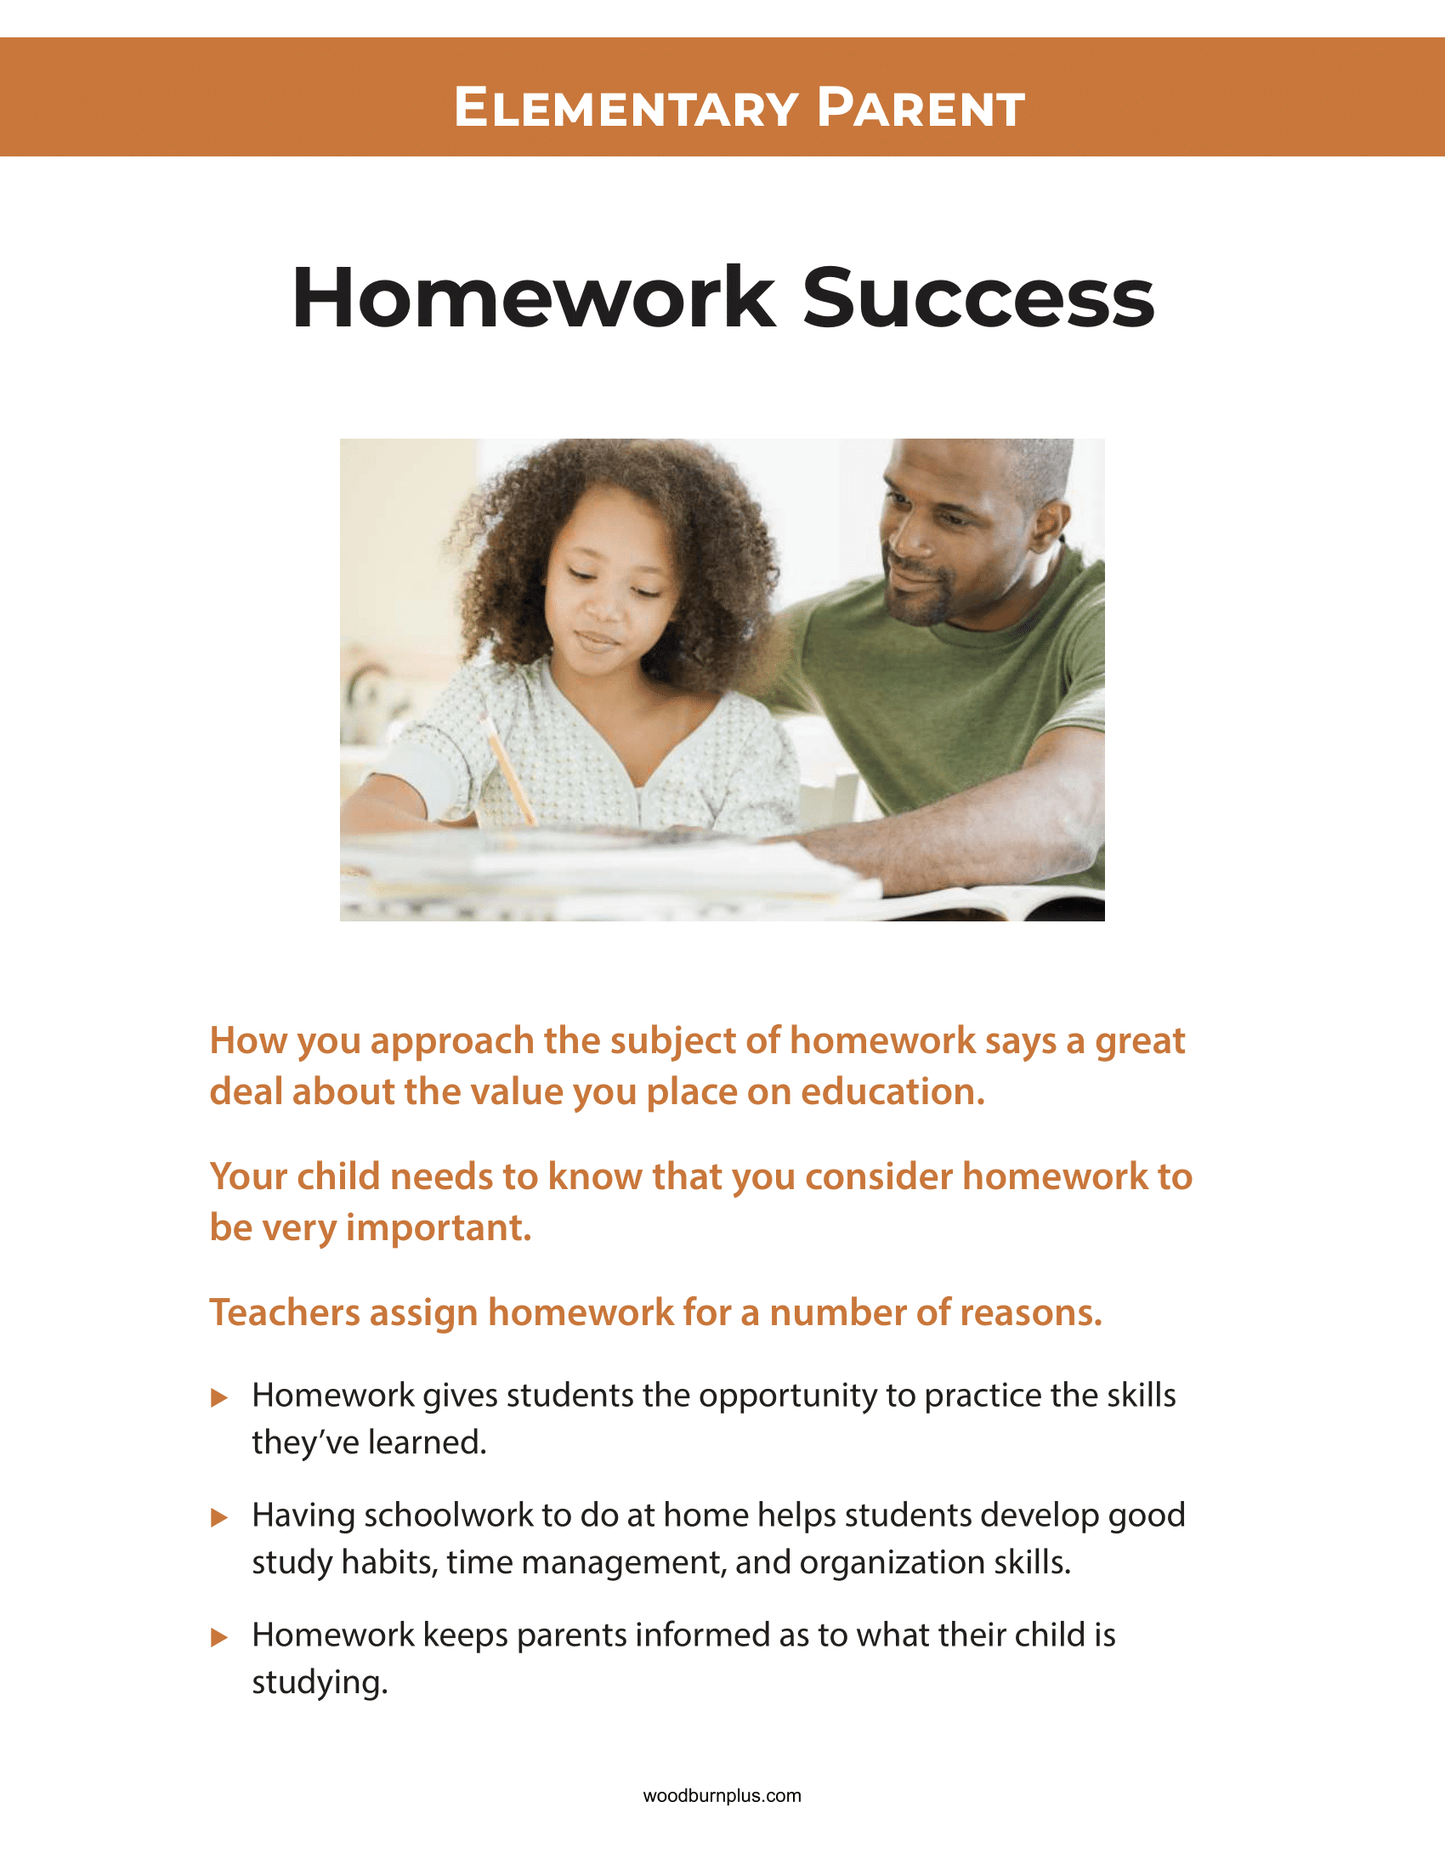 Elementary Parent - Homework Success